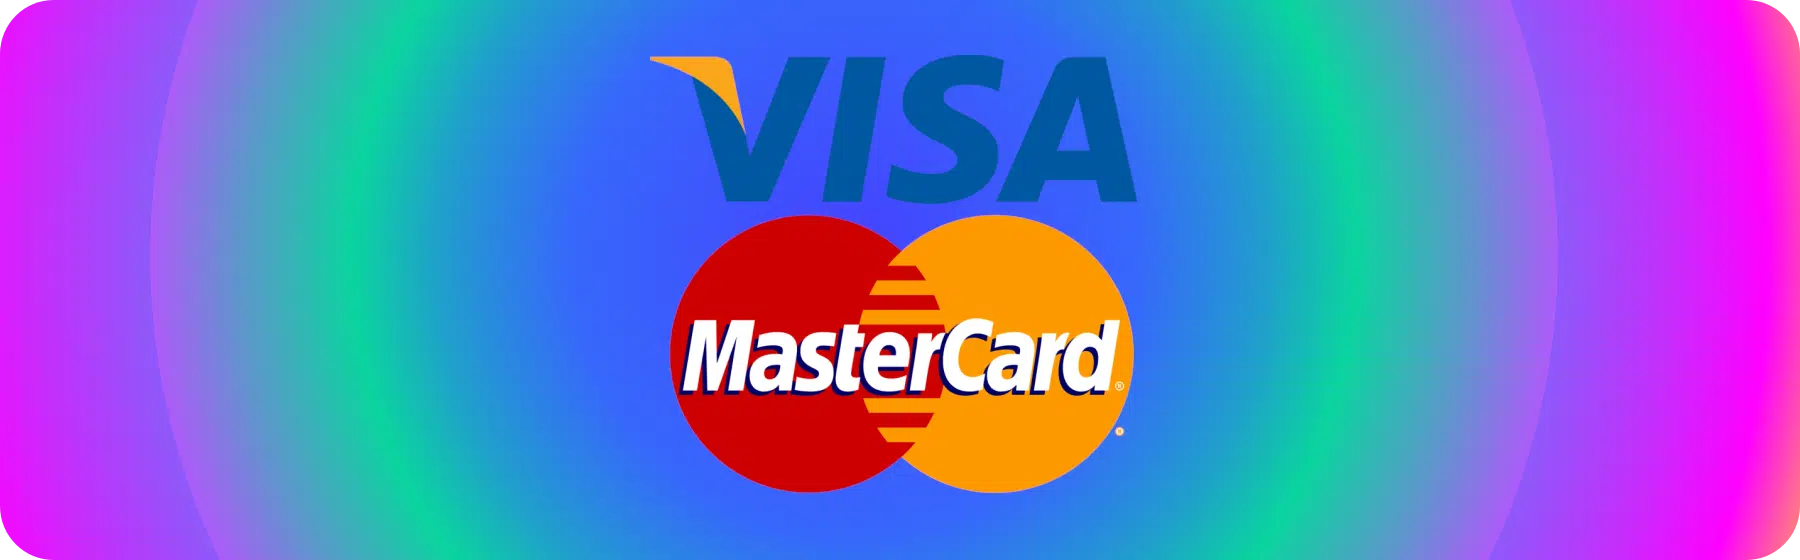 logo voor visa en mastercard betaling